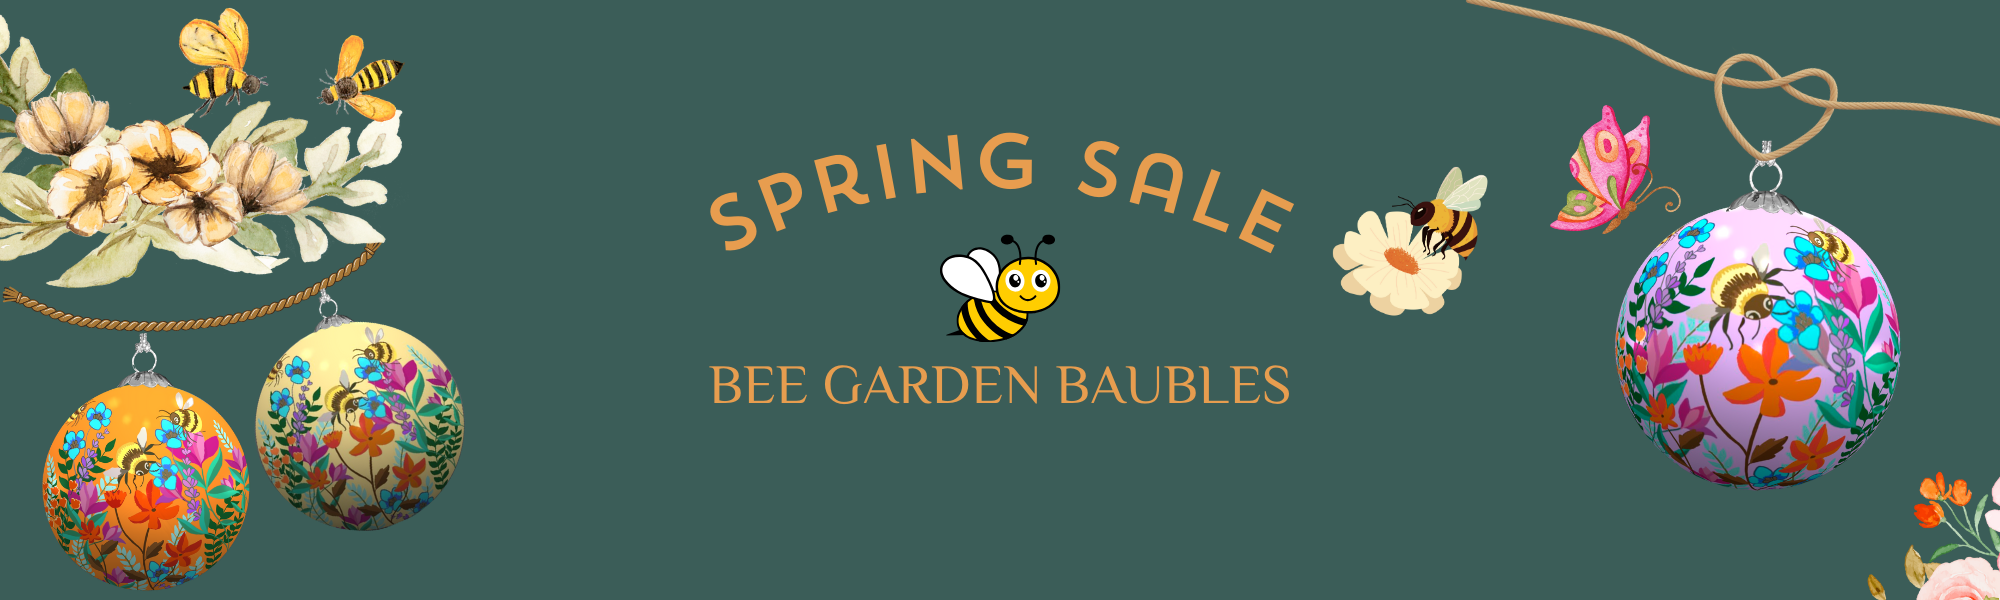 Spring Bee Garden Decorations Baubles